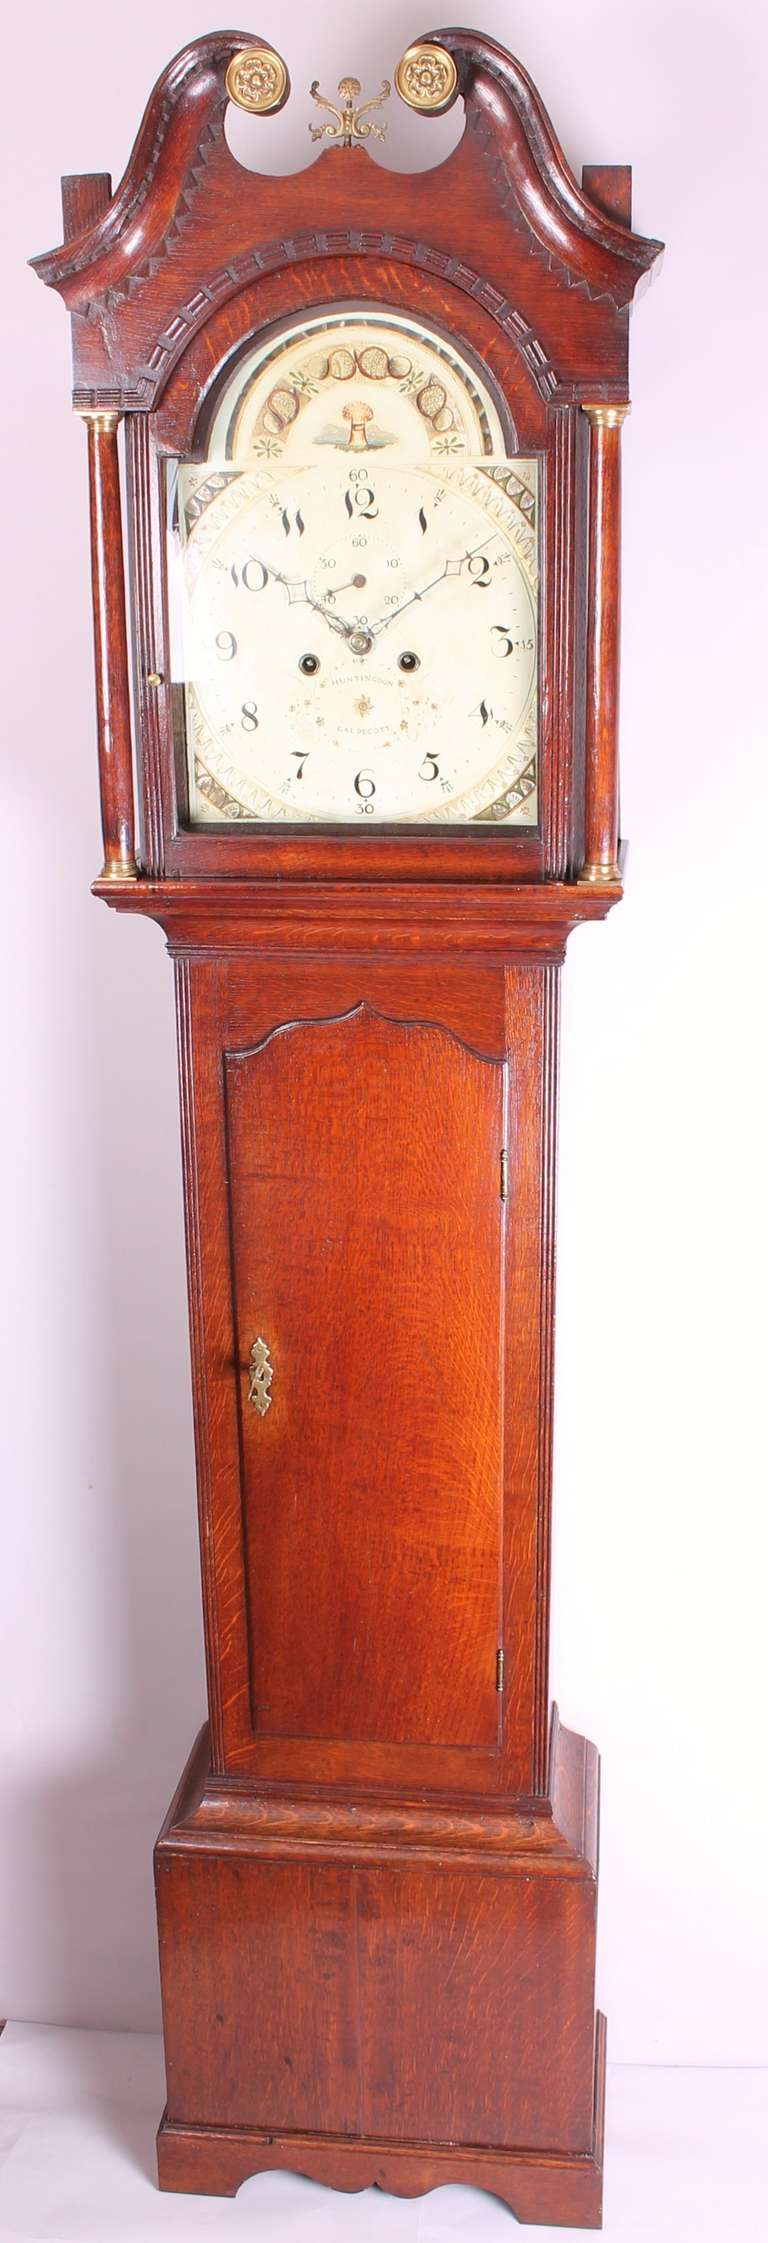 English Early 19th century oak long-case clock by Caldecott of Huntingdon